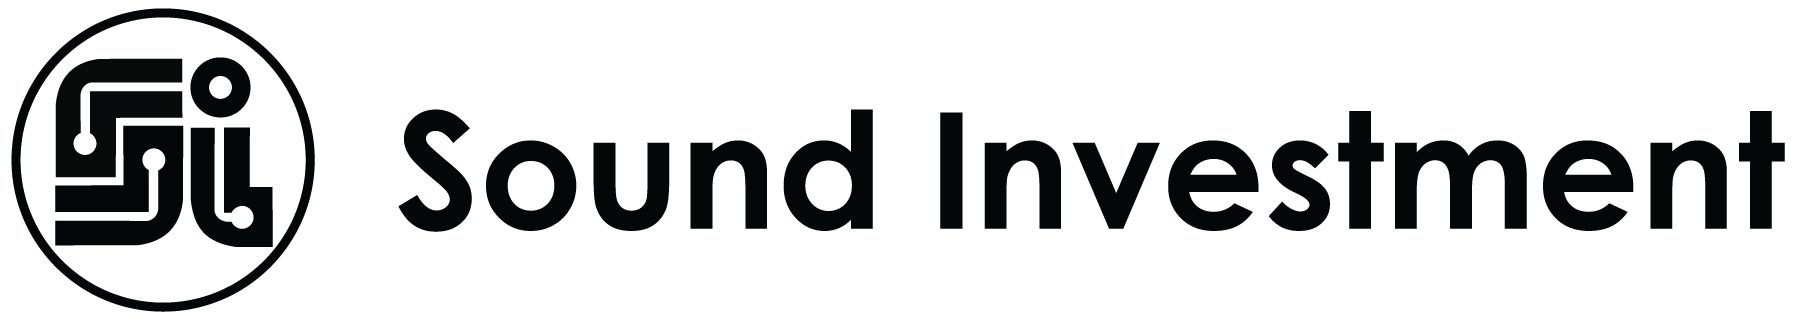 Sound-Investment-Logo-Black